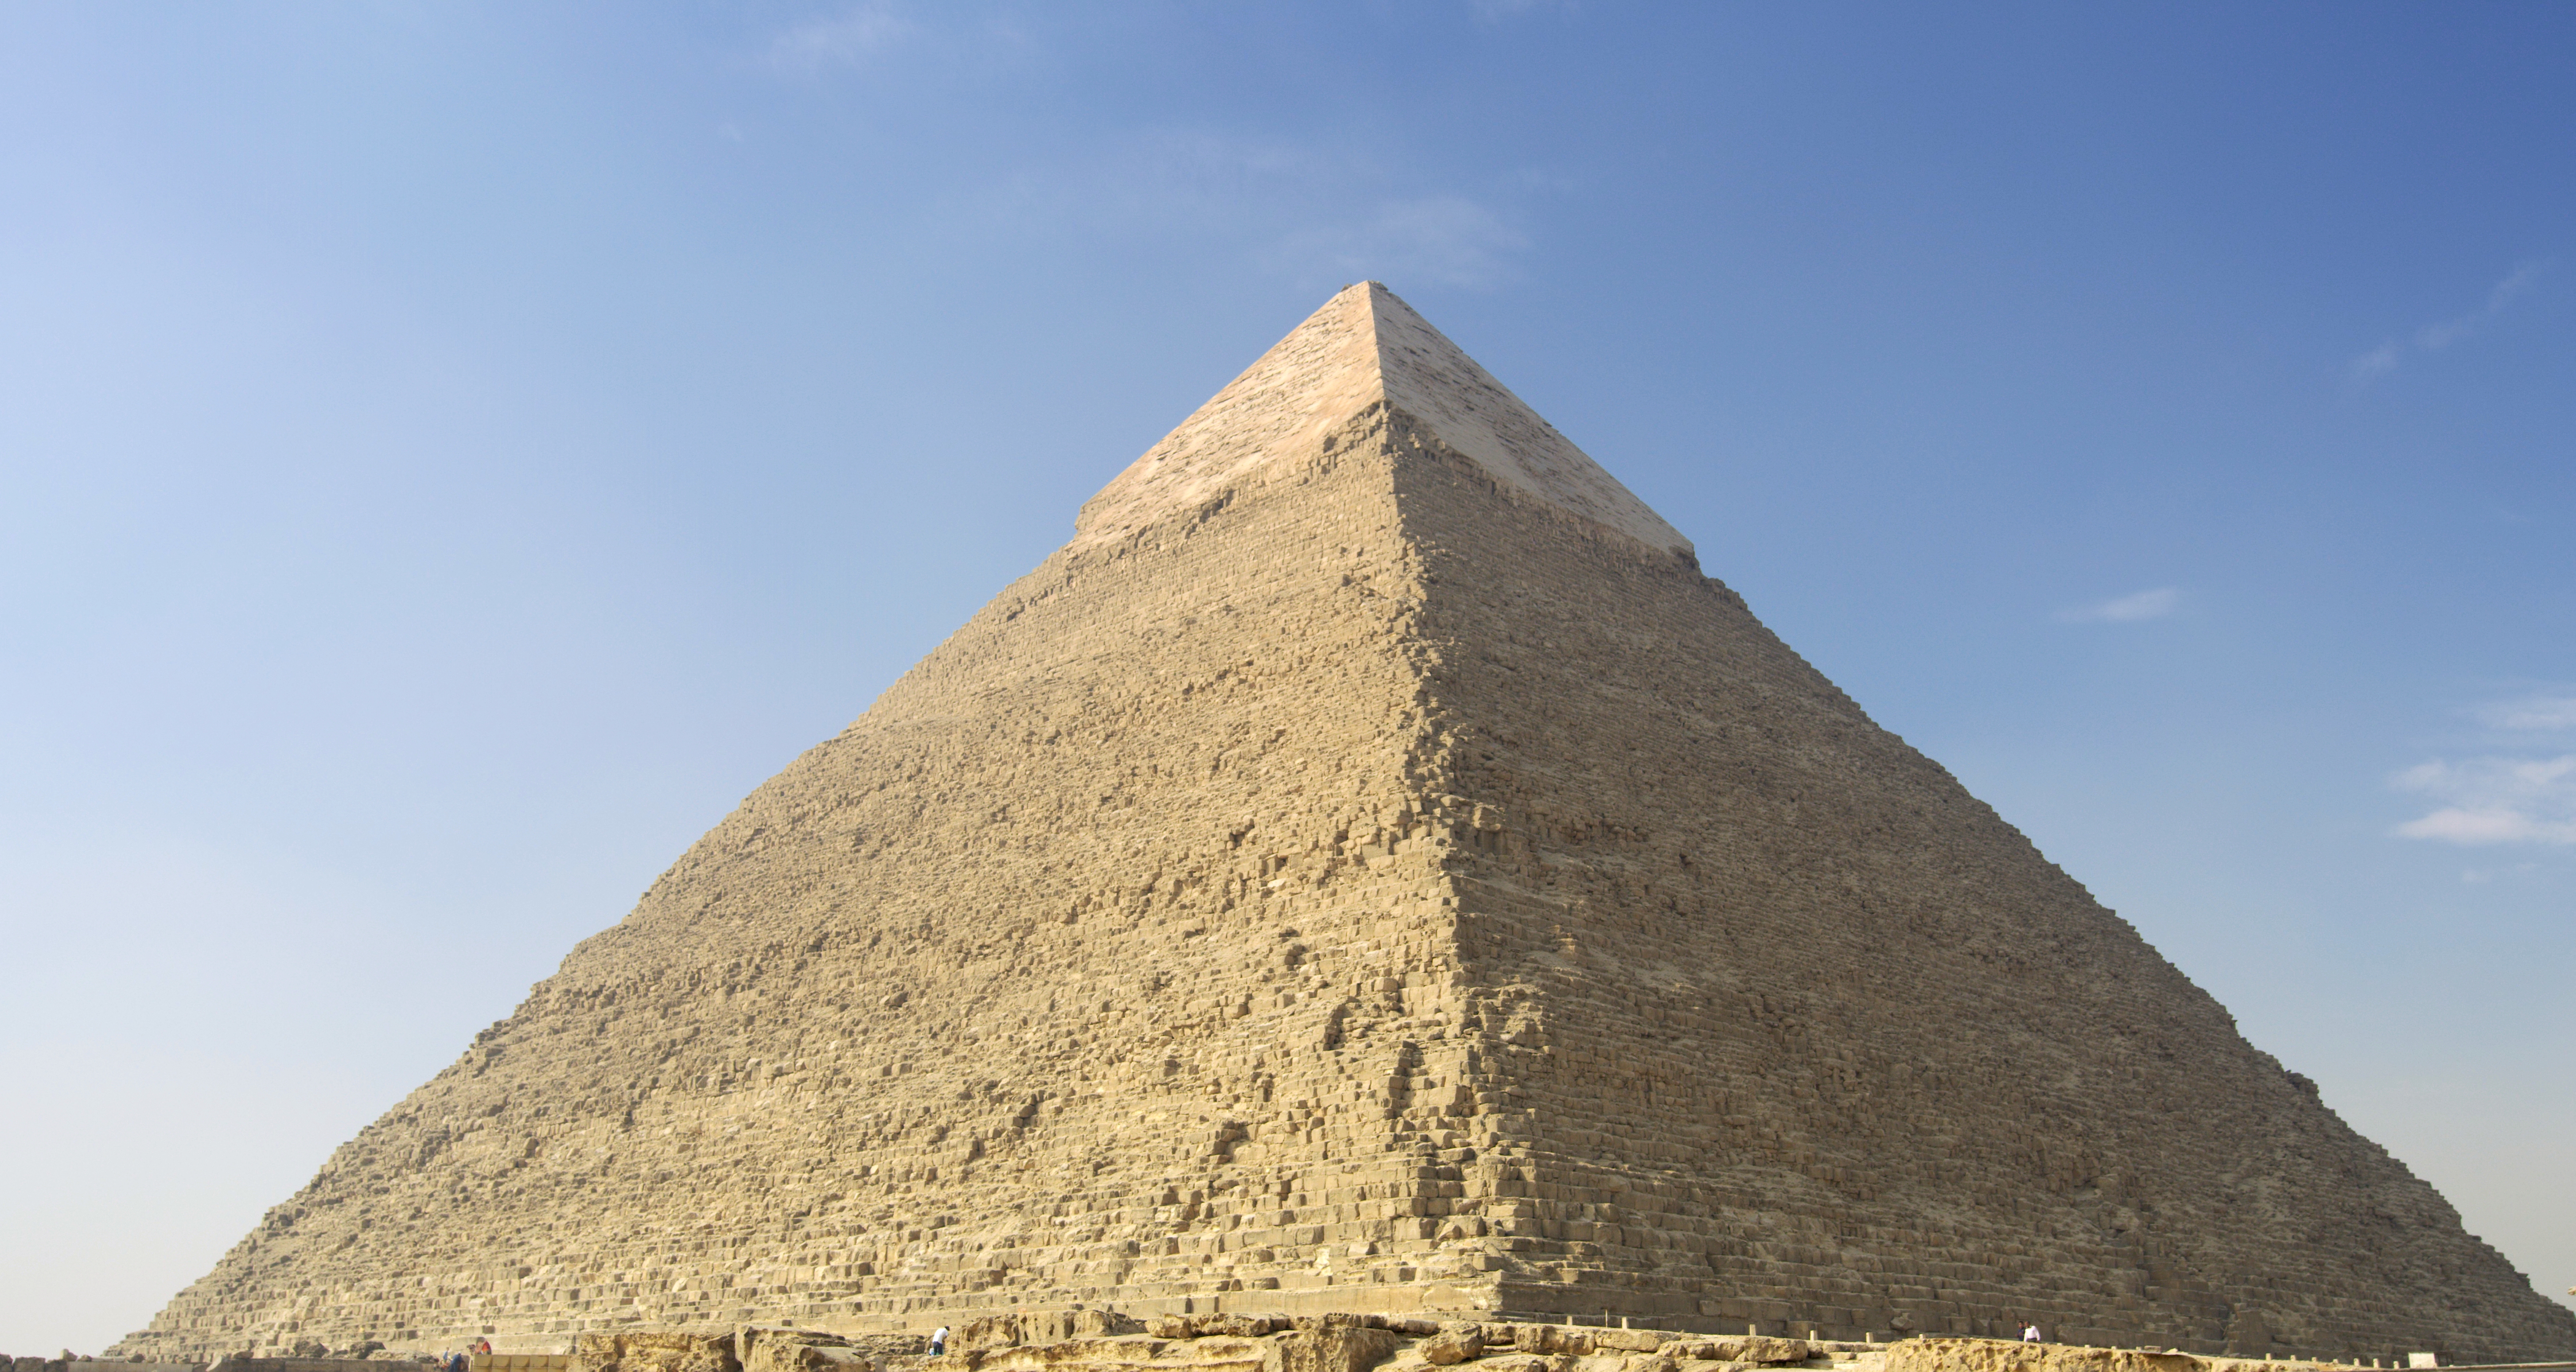 The Grand Pyramid, Giza, Egypt